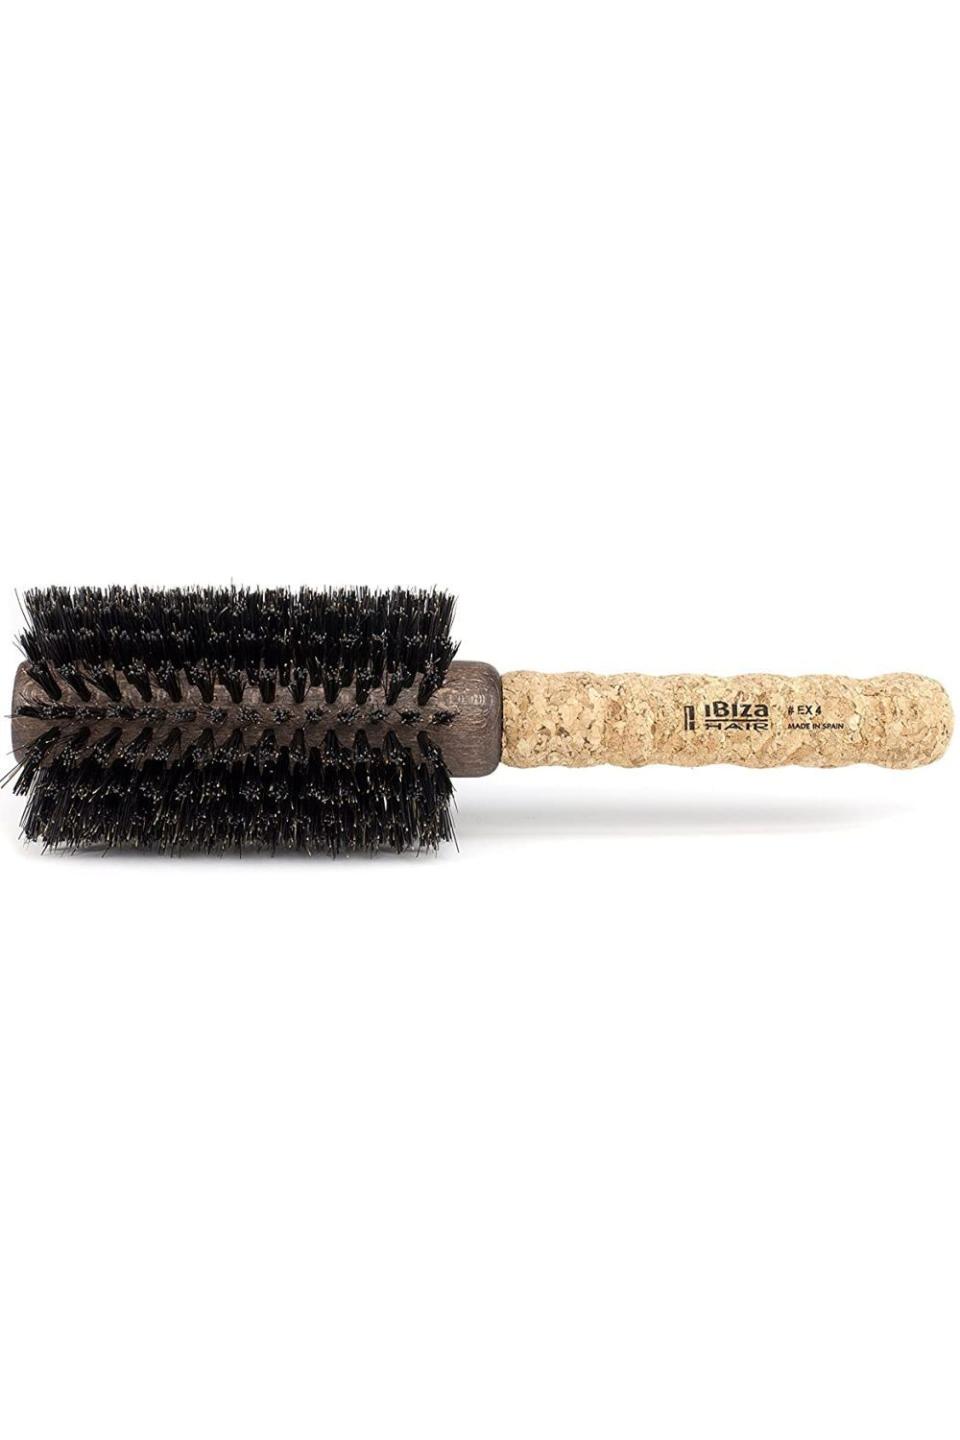 8) Ibiza Hair Brush - EX4 Boar-Bristle Brush